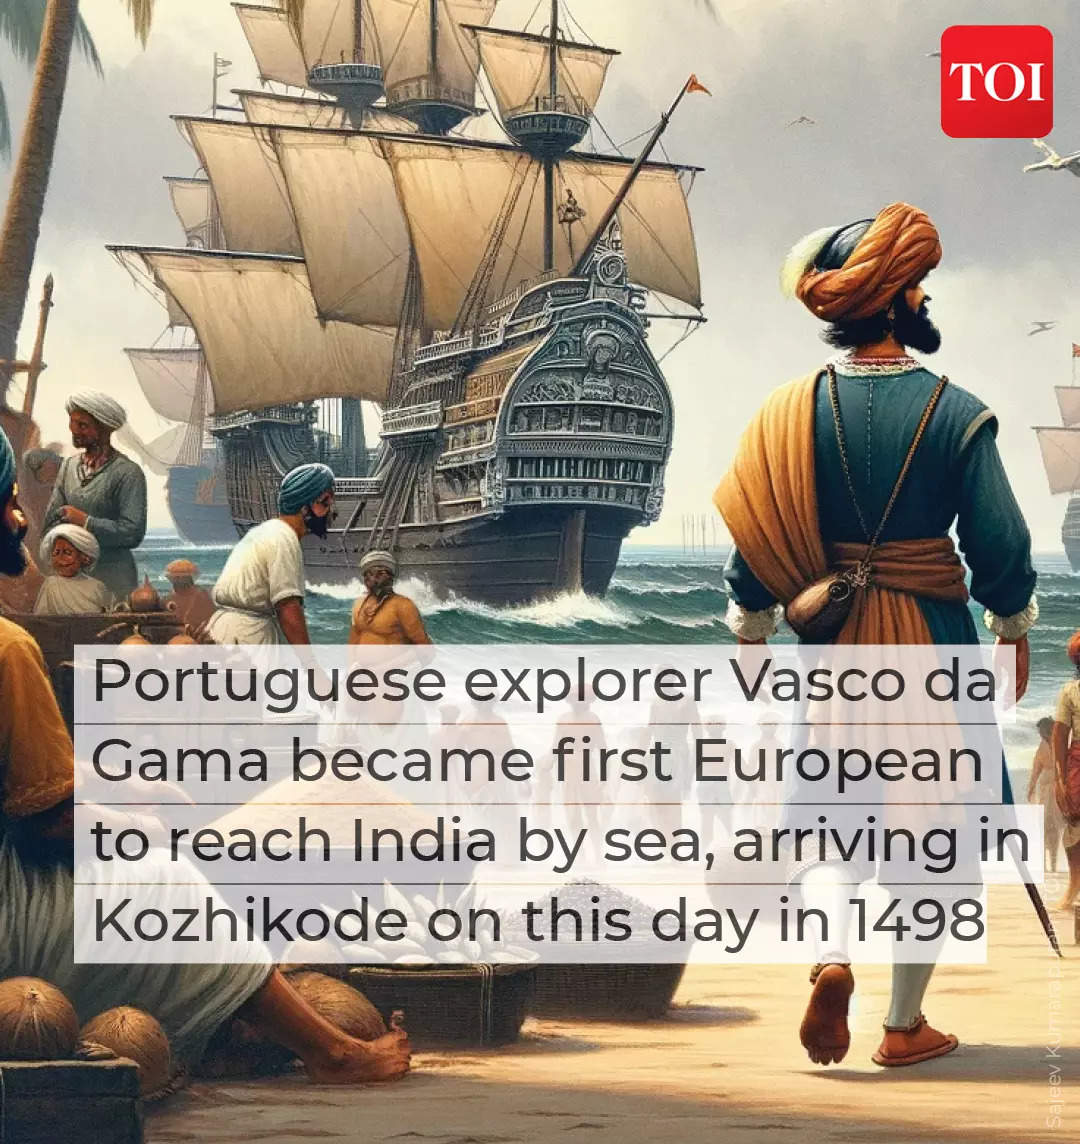 7. The epic sea voyage to India